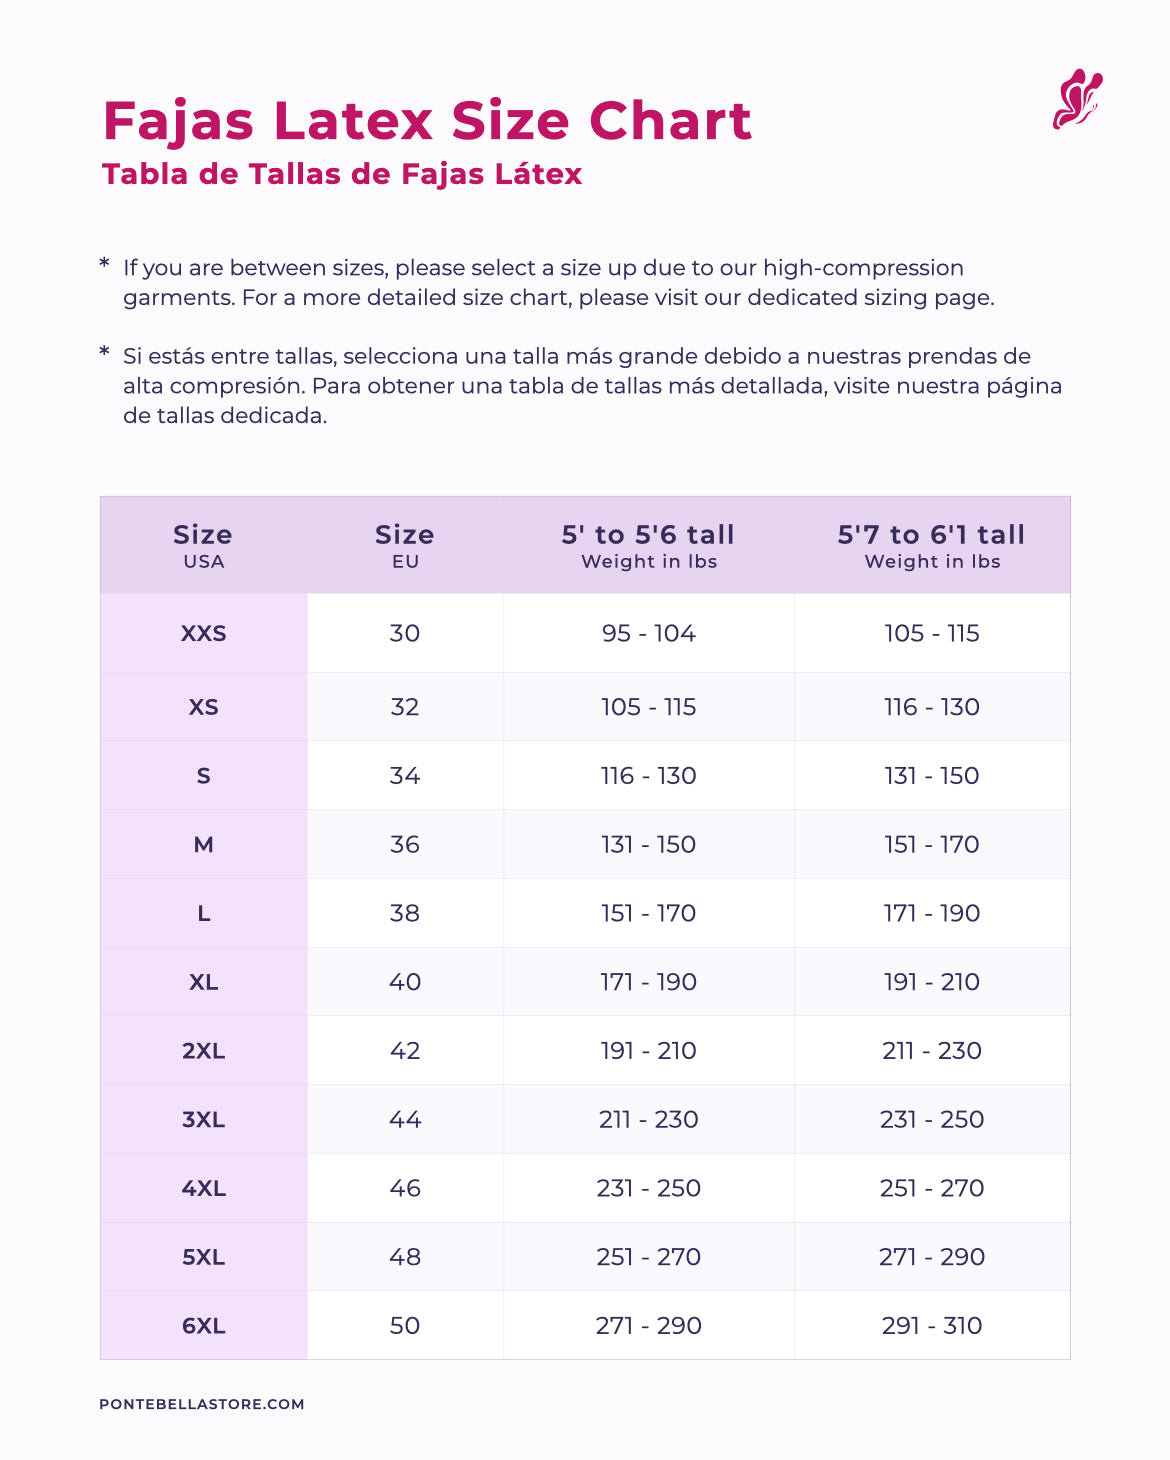 Fajas Size Chart PonteBella